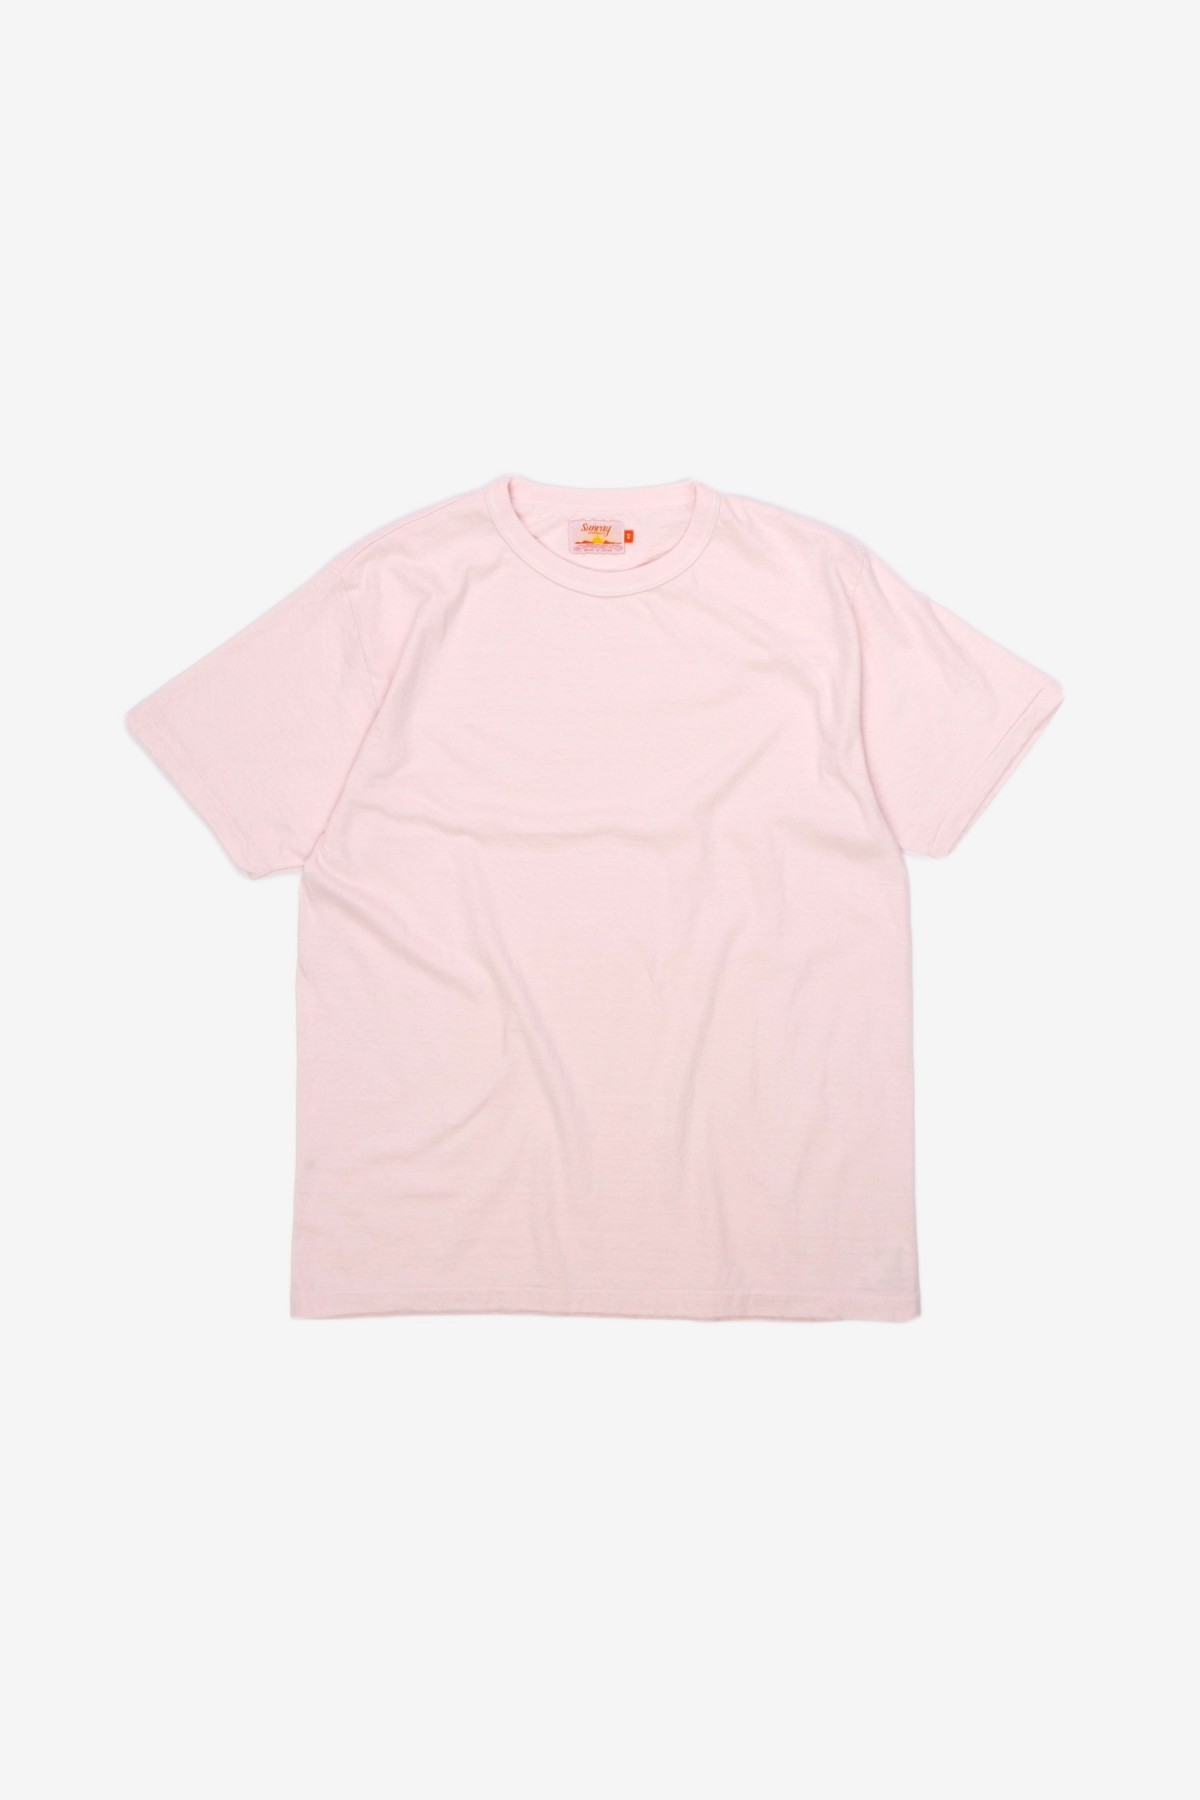 Sunray Sportswear Haleiwa Short Sleeve T-Shirt in Barely Pink